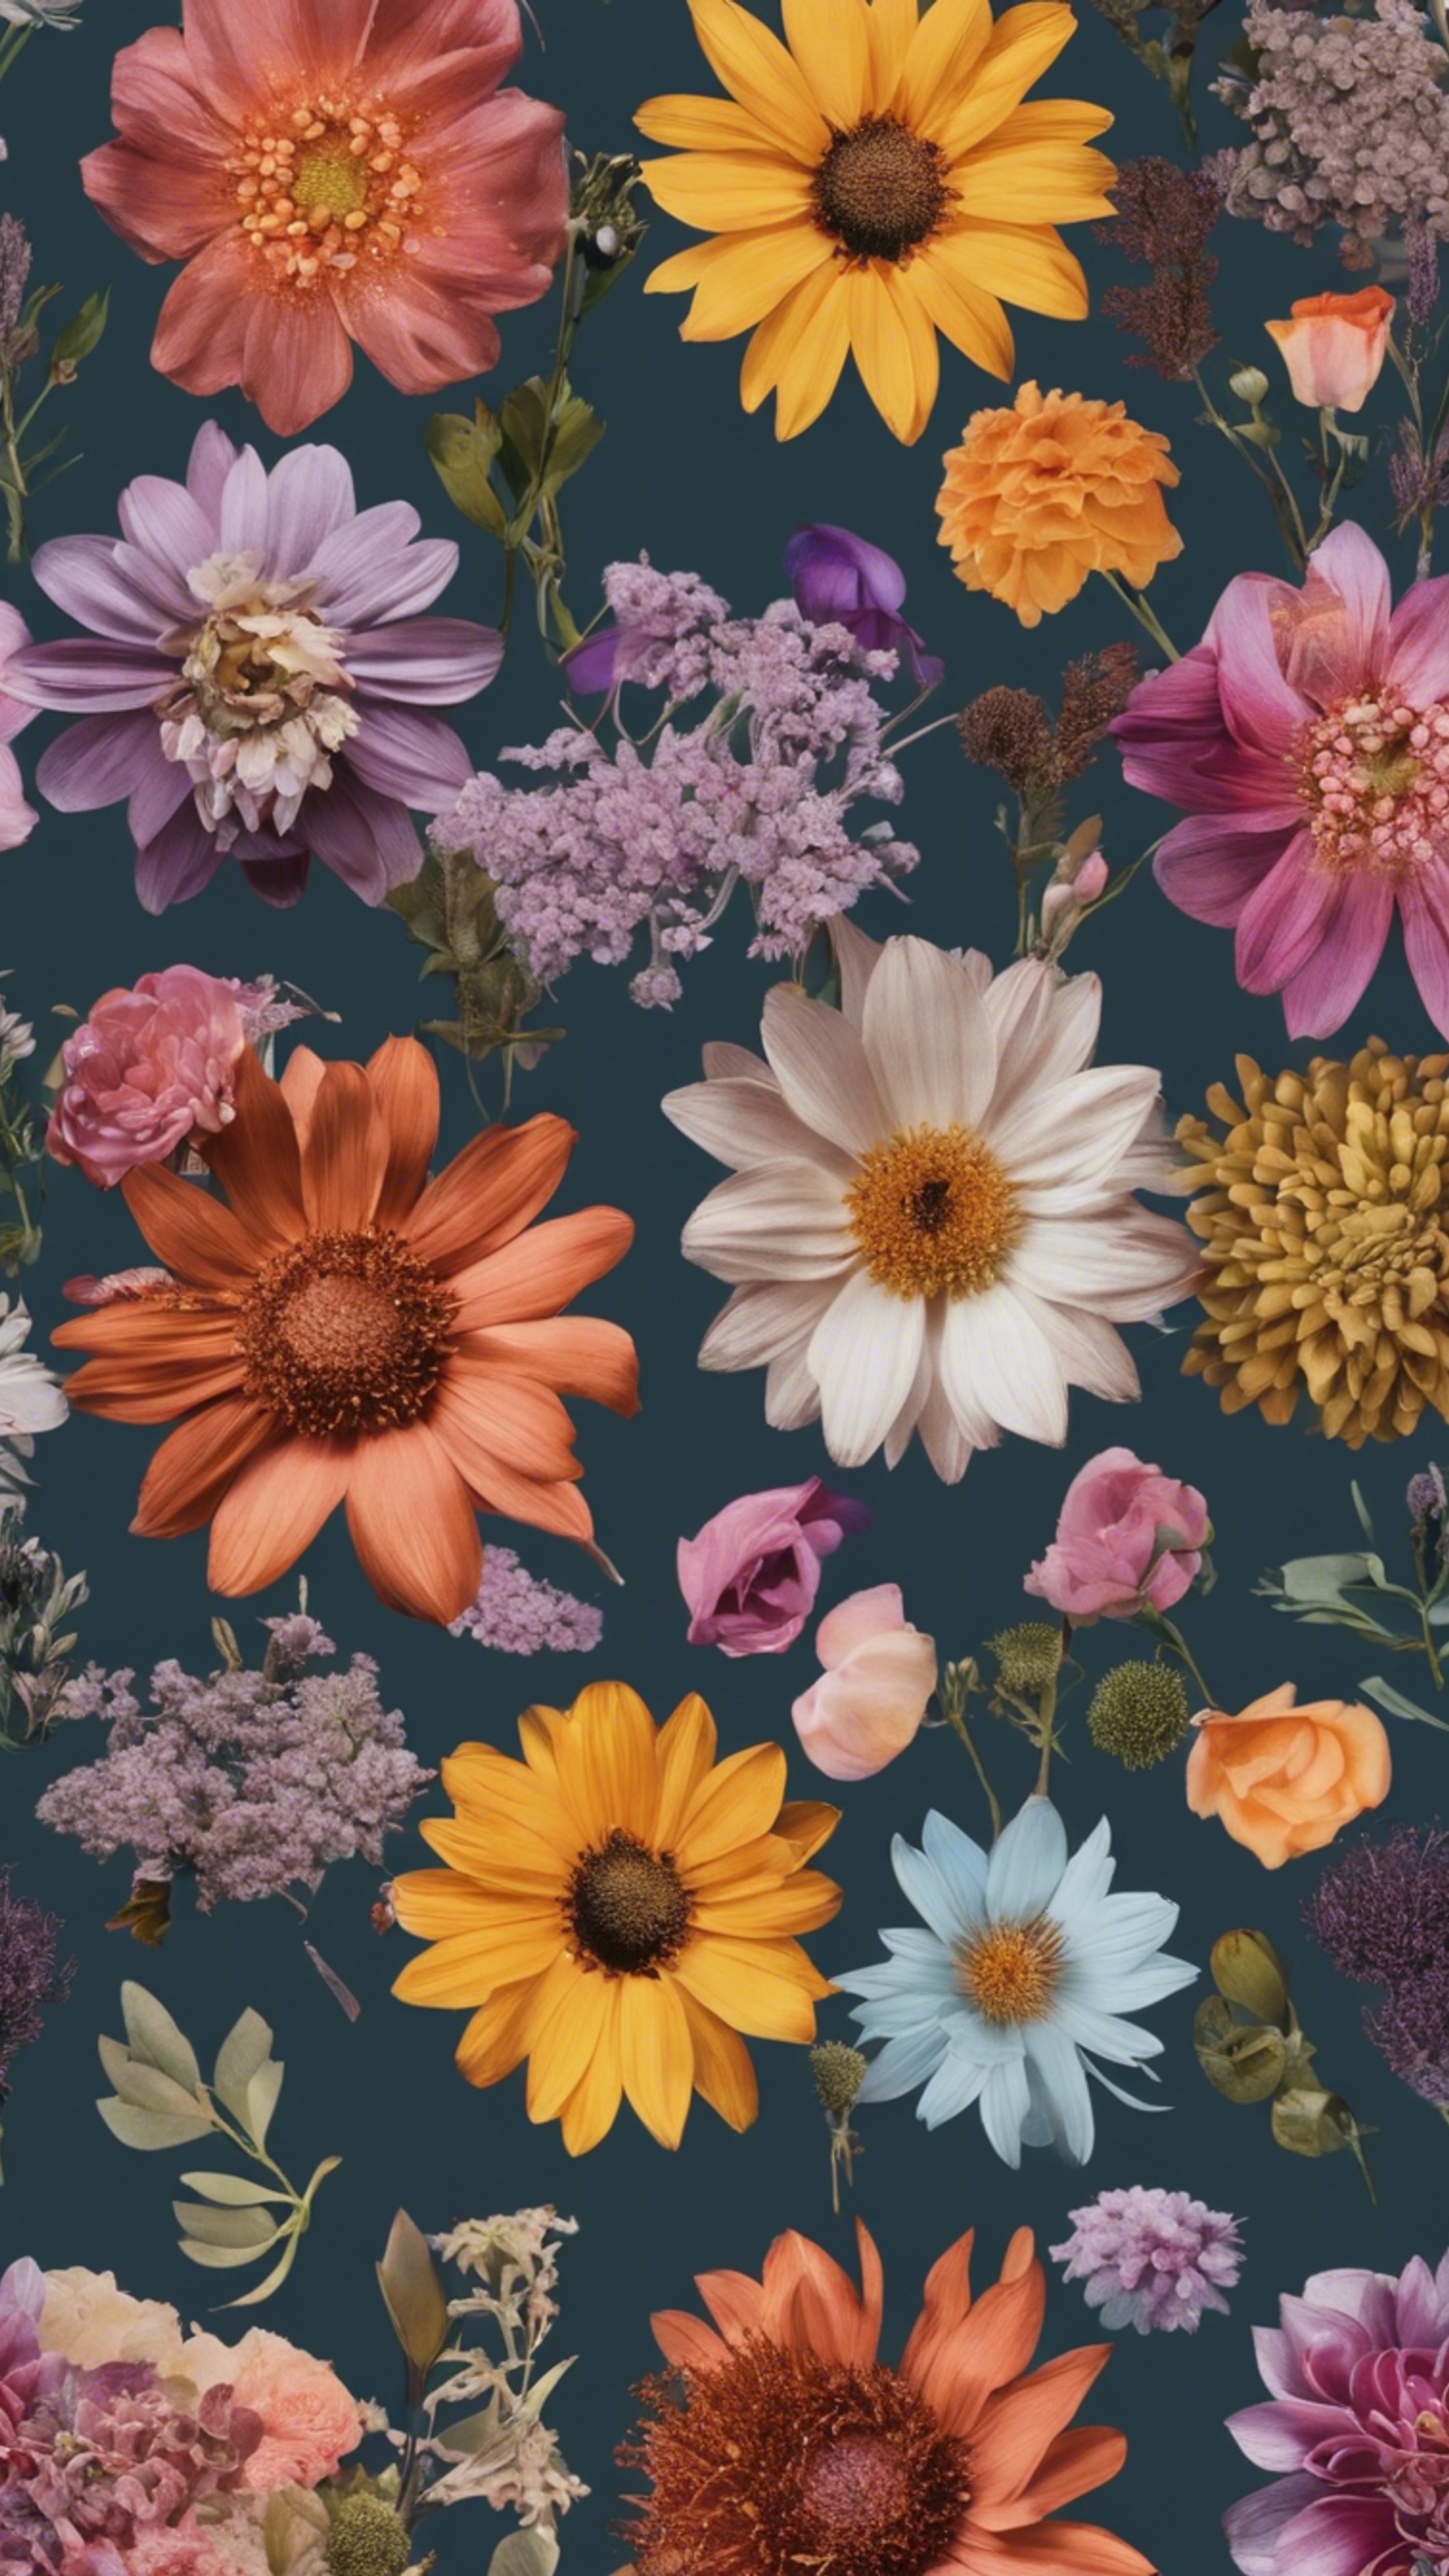 Multiple flowers of different types and colors, distinctively arranged in a bohemian floral design pattern. duvar kağıdı[d475d4e8f3a0489d92d5]